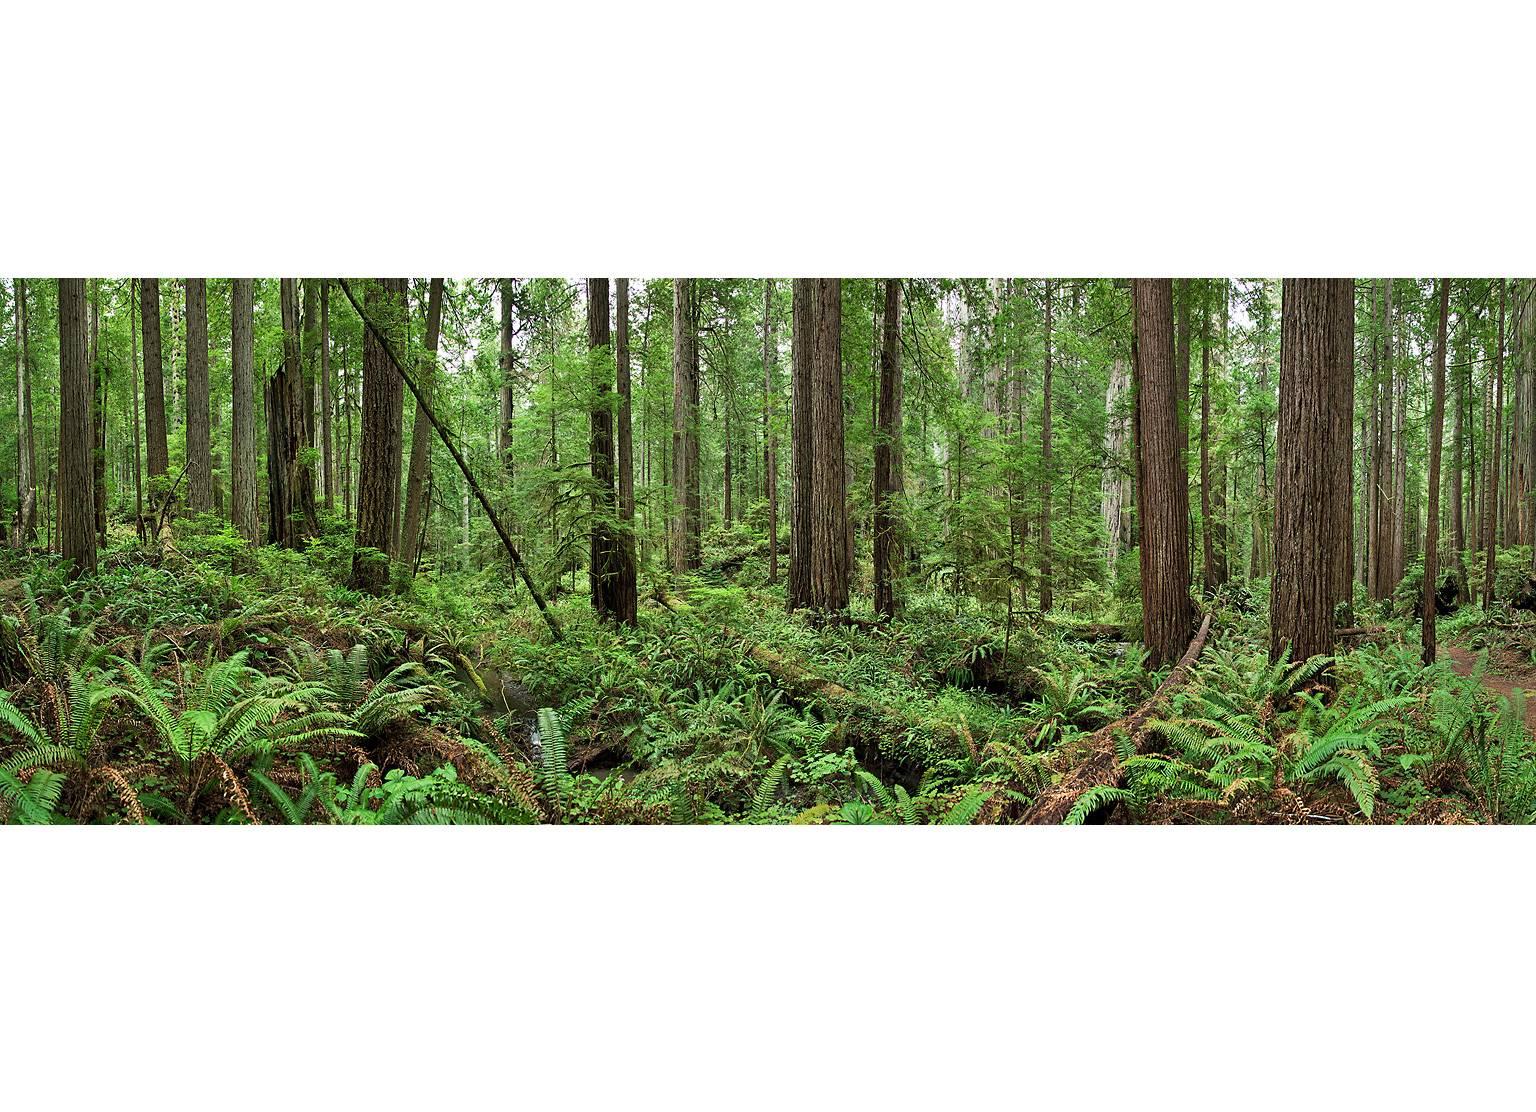 Erik Pawassar Landscape Photograph - Redwoods - large format nature observation panorama of green redwoods forest